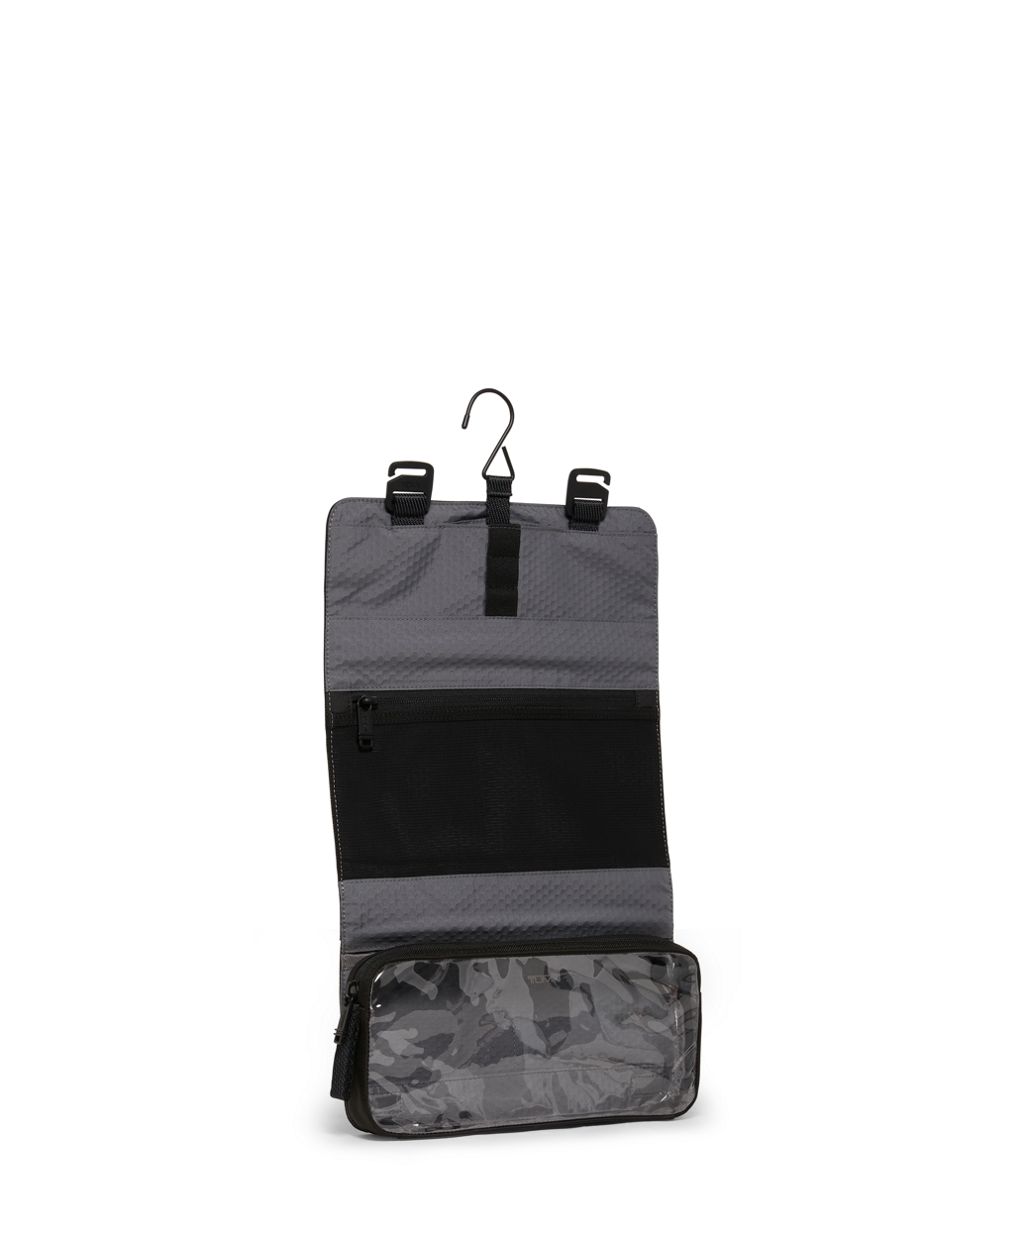 Airline Pilot (Bathroom Hanging Travel Kit) Luggage Review. #tumi #lug